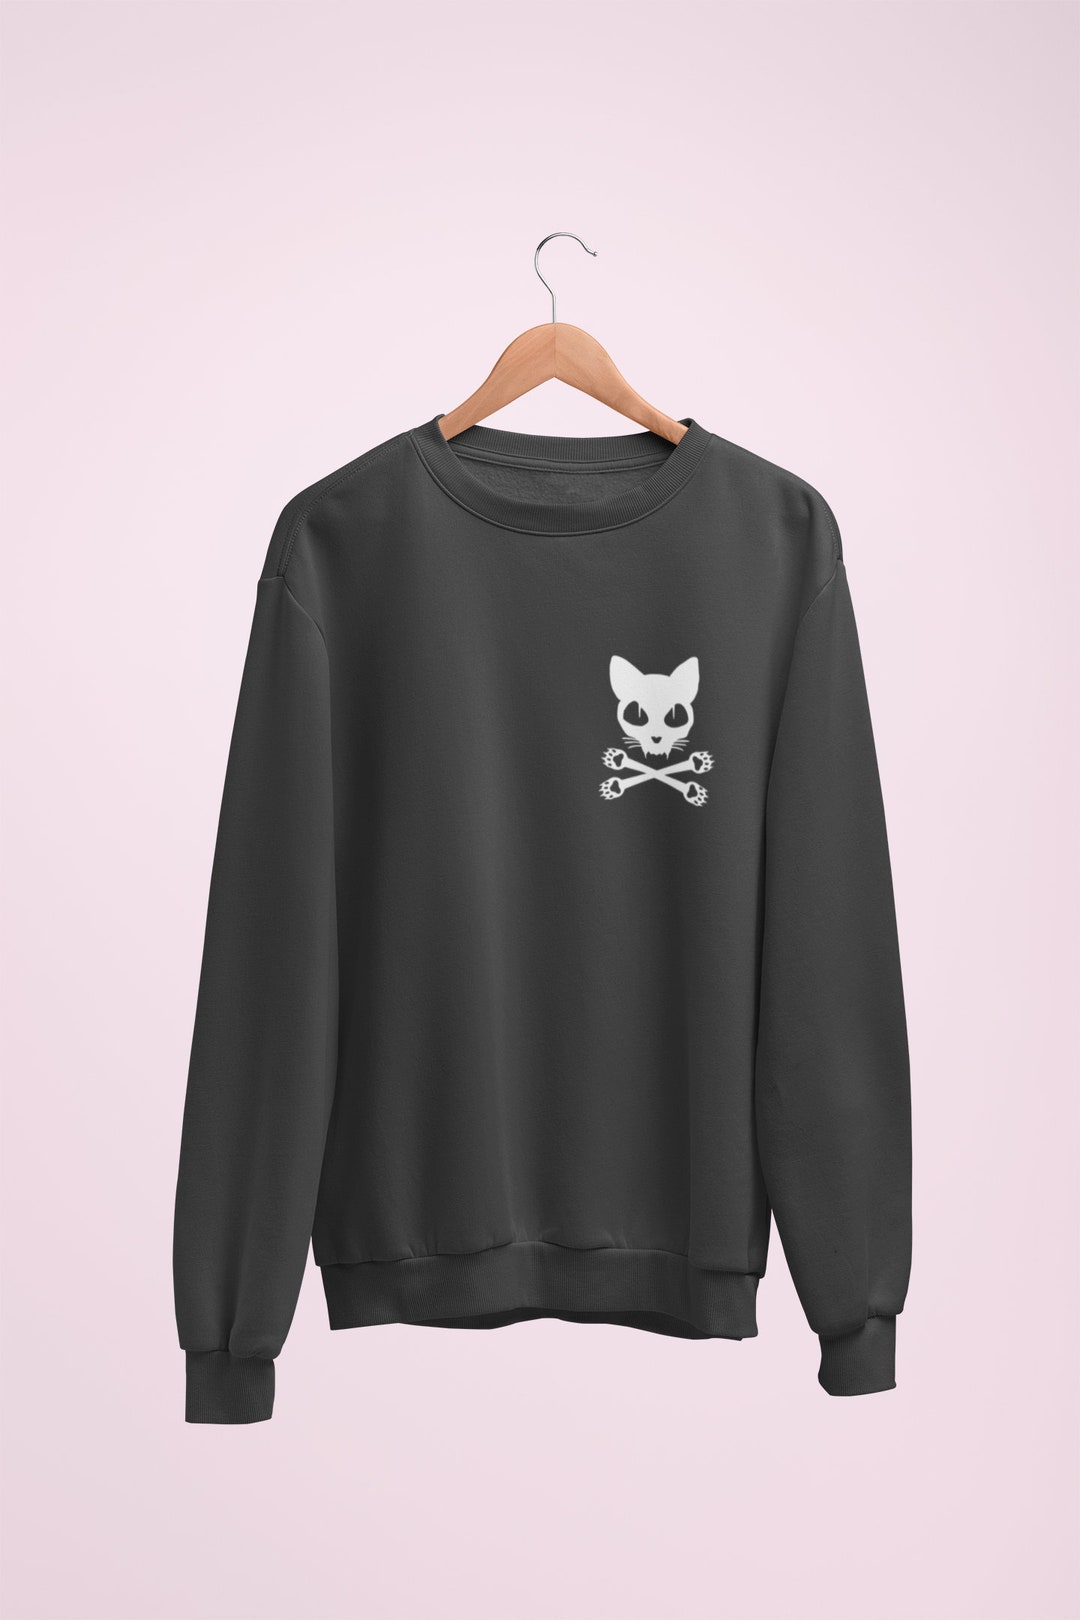 Halloween Skull Cat Sweater / Spooky Clothing Halloween - Etsy UK